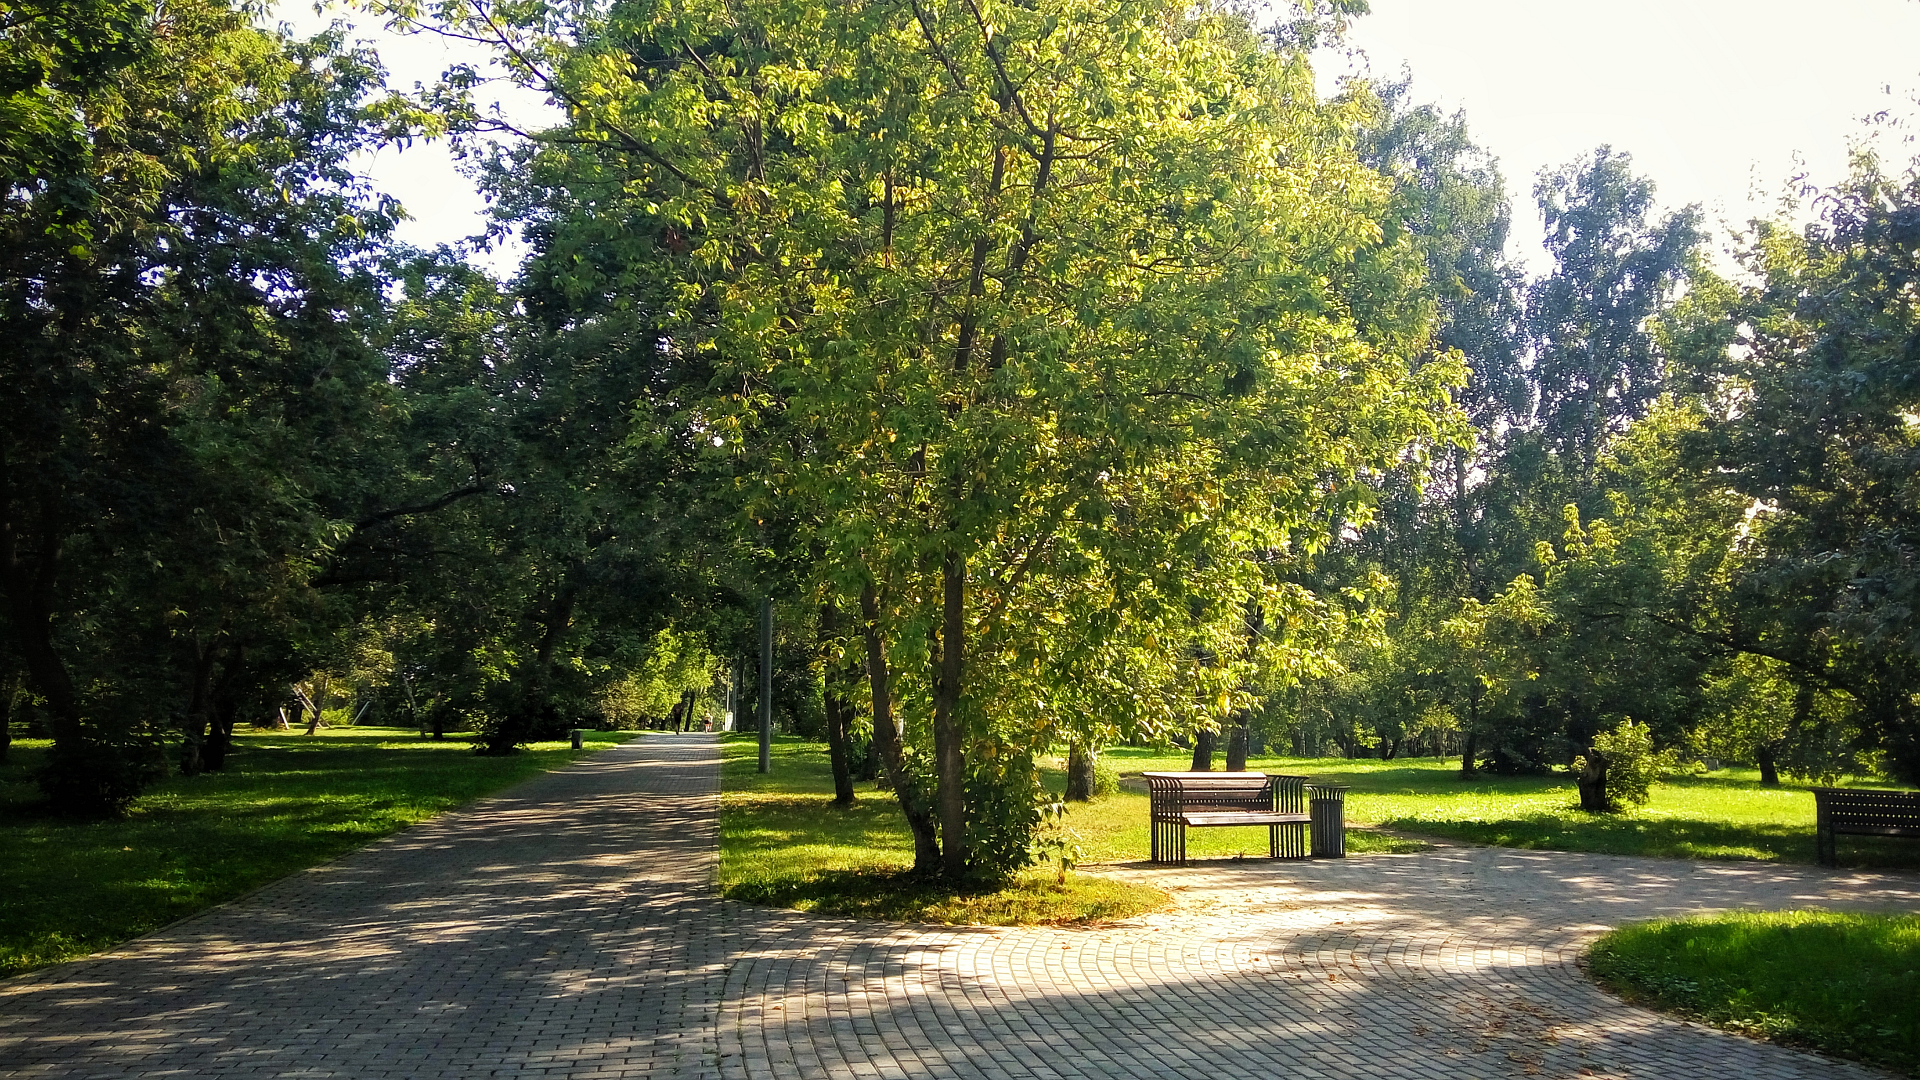 General 1920x1080 summer trees park green pavements bench dappled sunlight